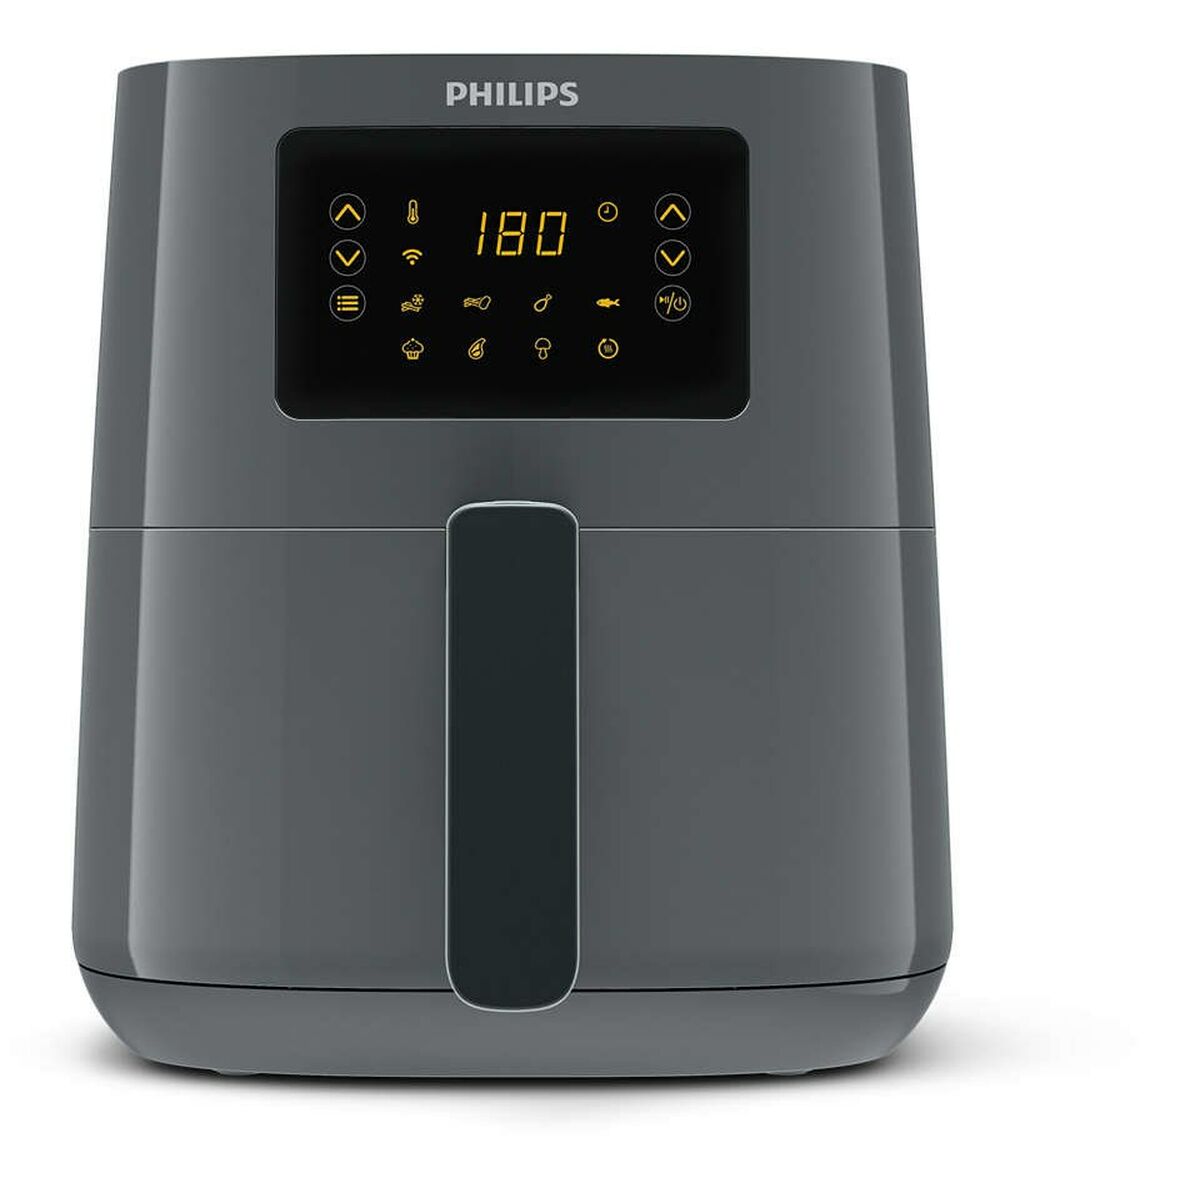 Heißluftfritteuse Philips HD9255/60 Schwarz Grau 1400 W 4,1 L - CA International  